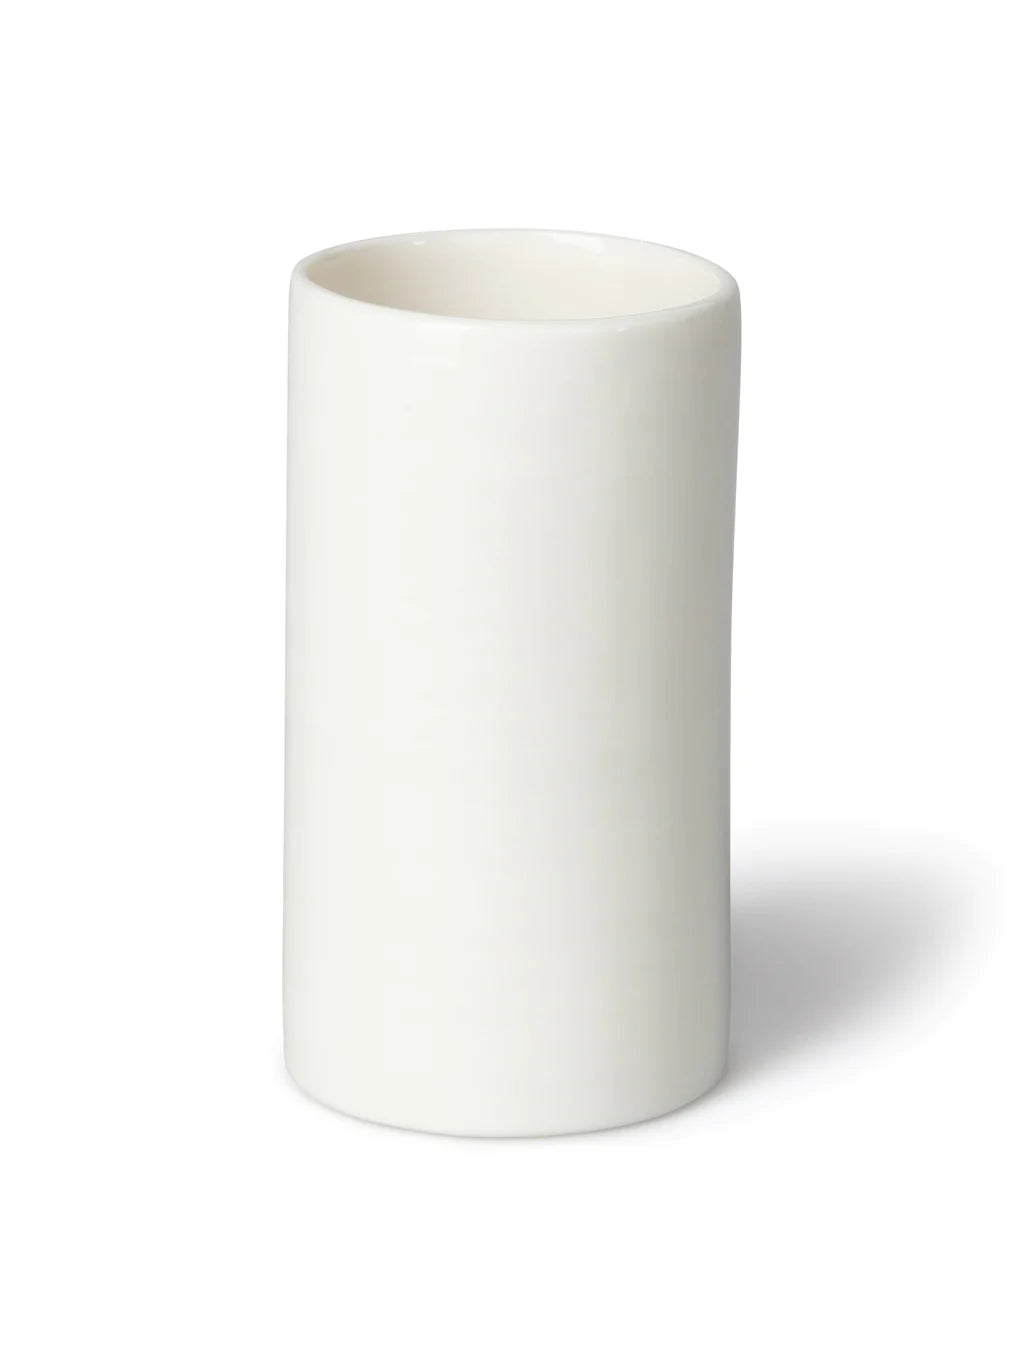 Tall Porcelain Pot